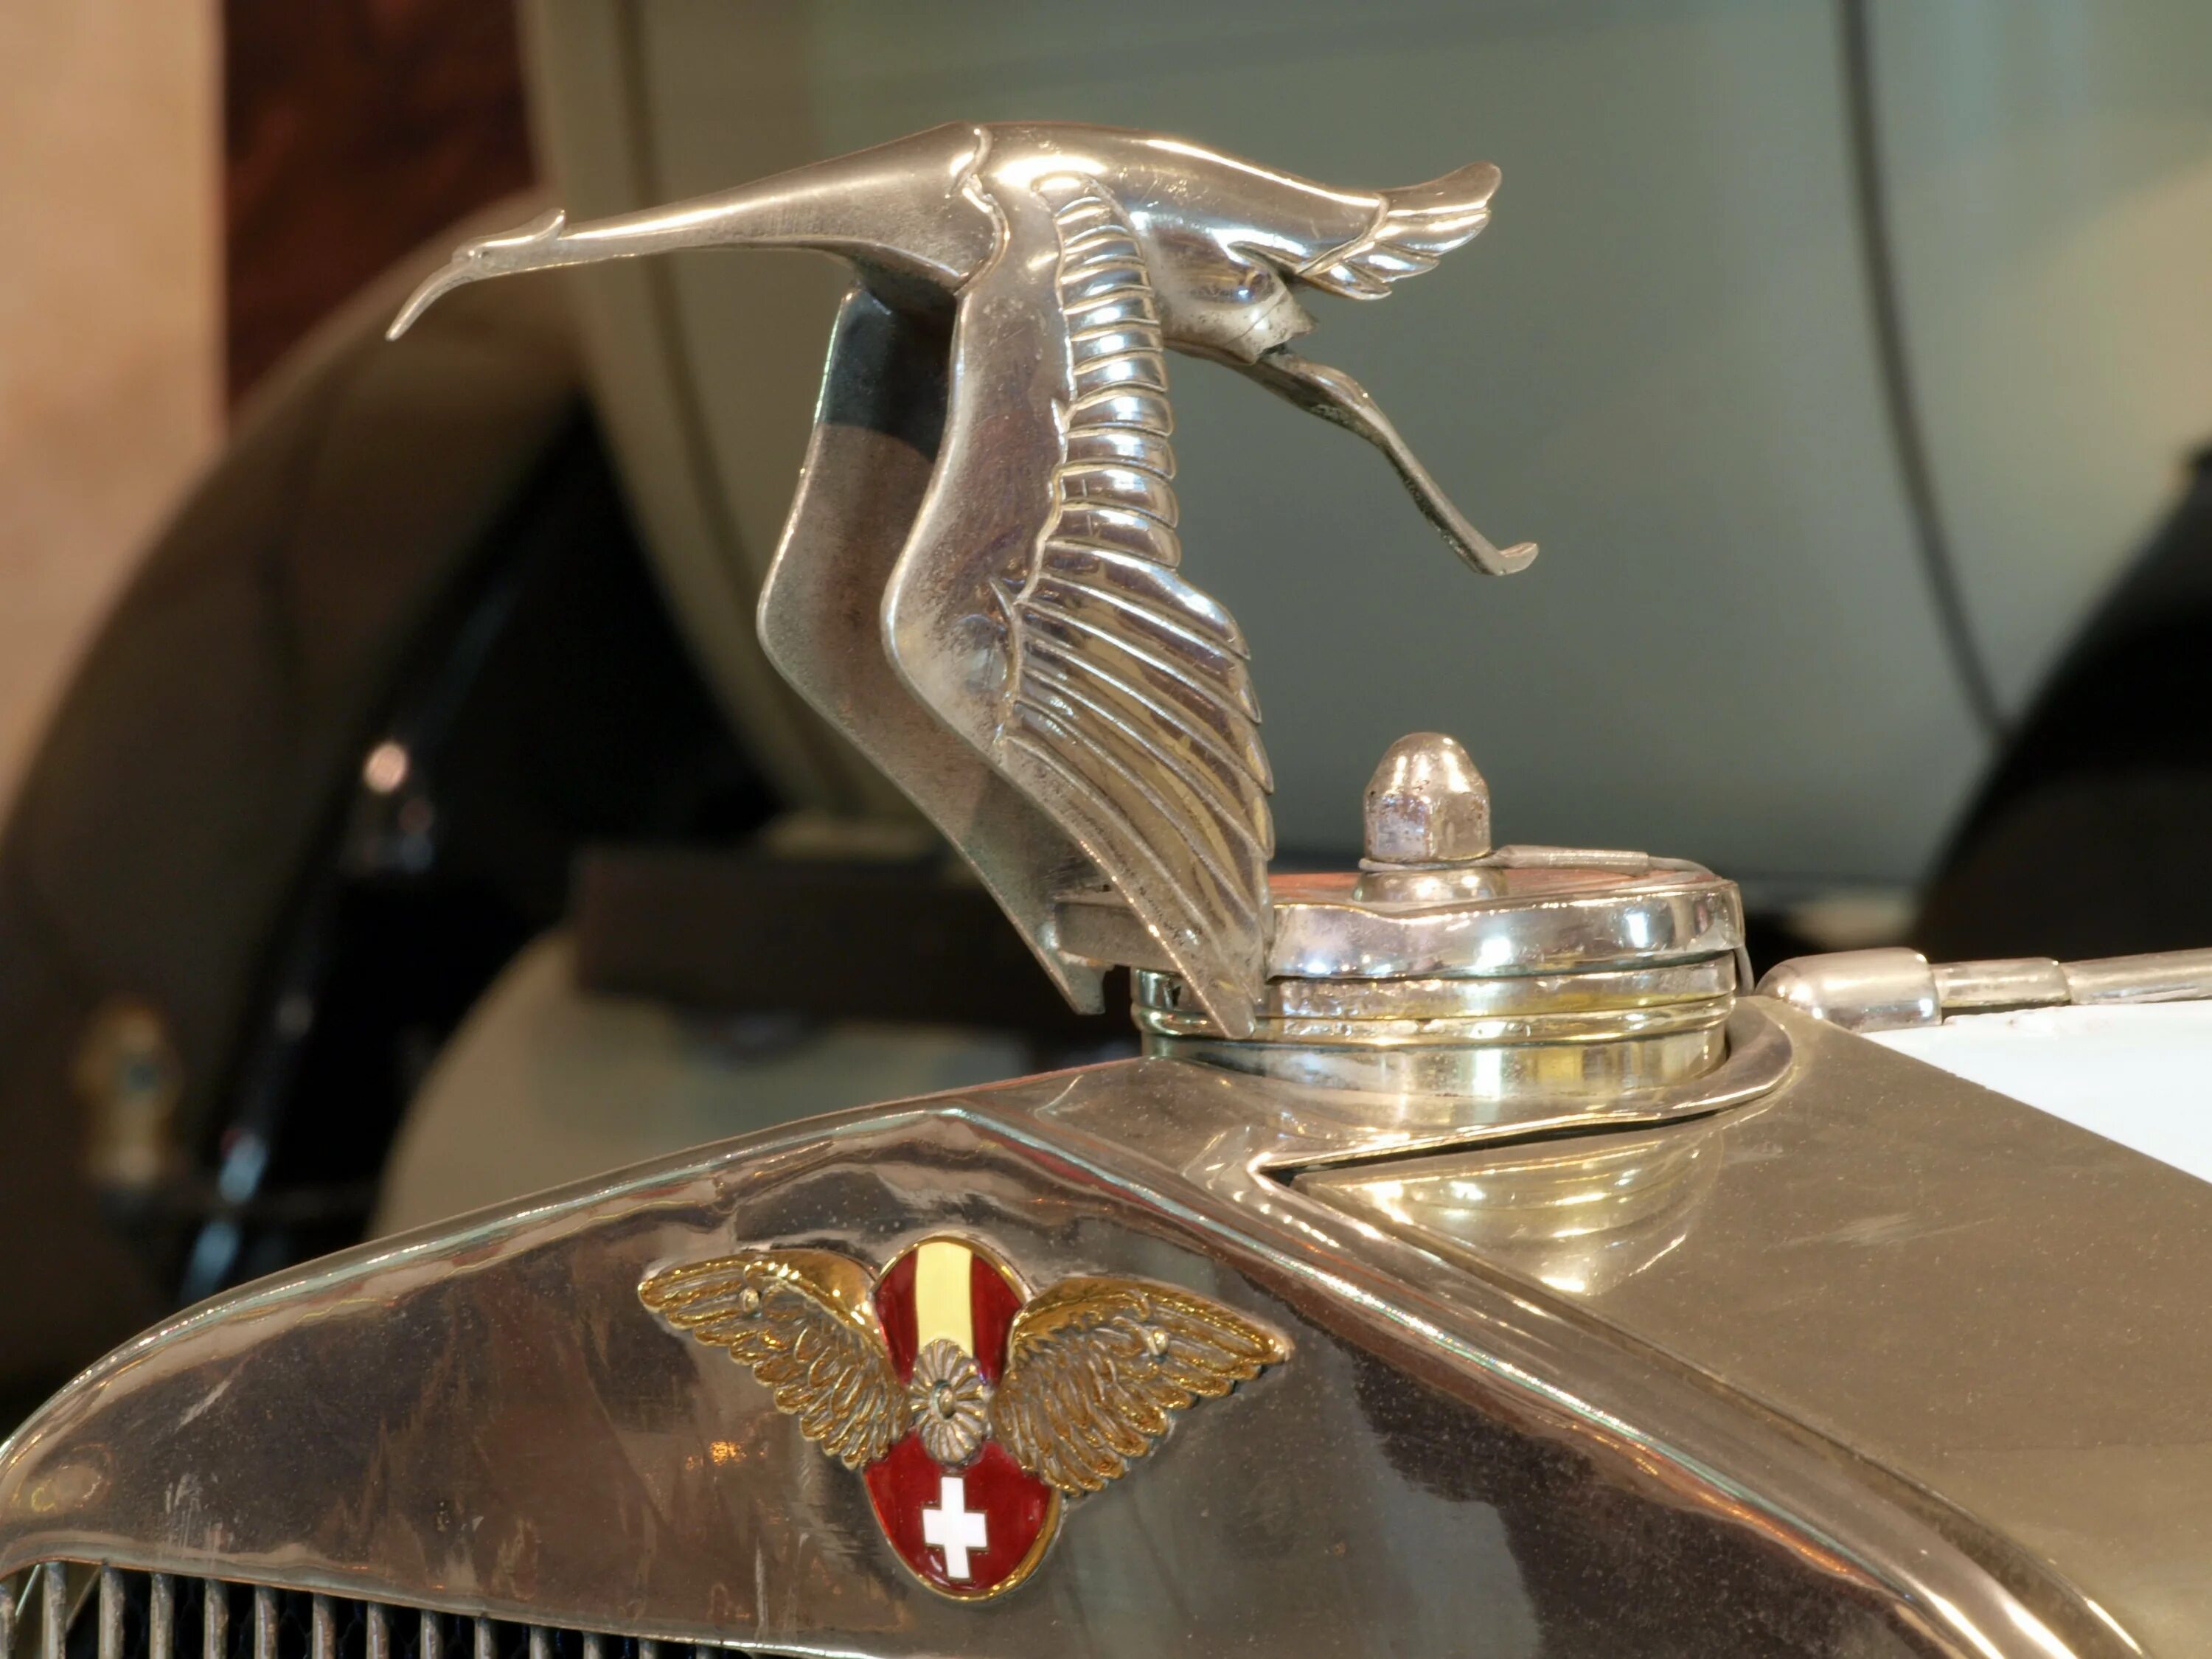 Значок на капоте. Hispano-Suiza h6b million-Guiet Dual-Cowl Phaeton (1924). Машина с крыльями. Крыло автомобиля. Машина с орлом на капоте марка.